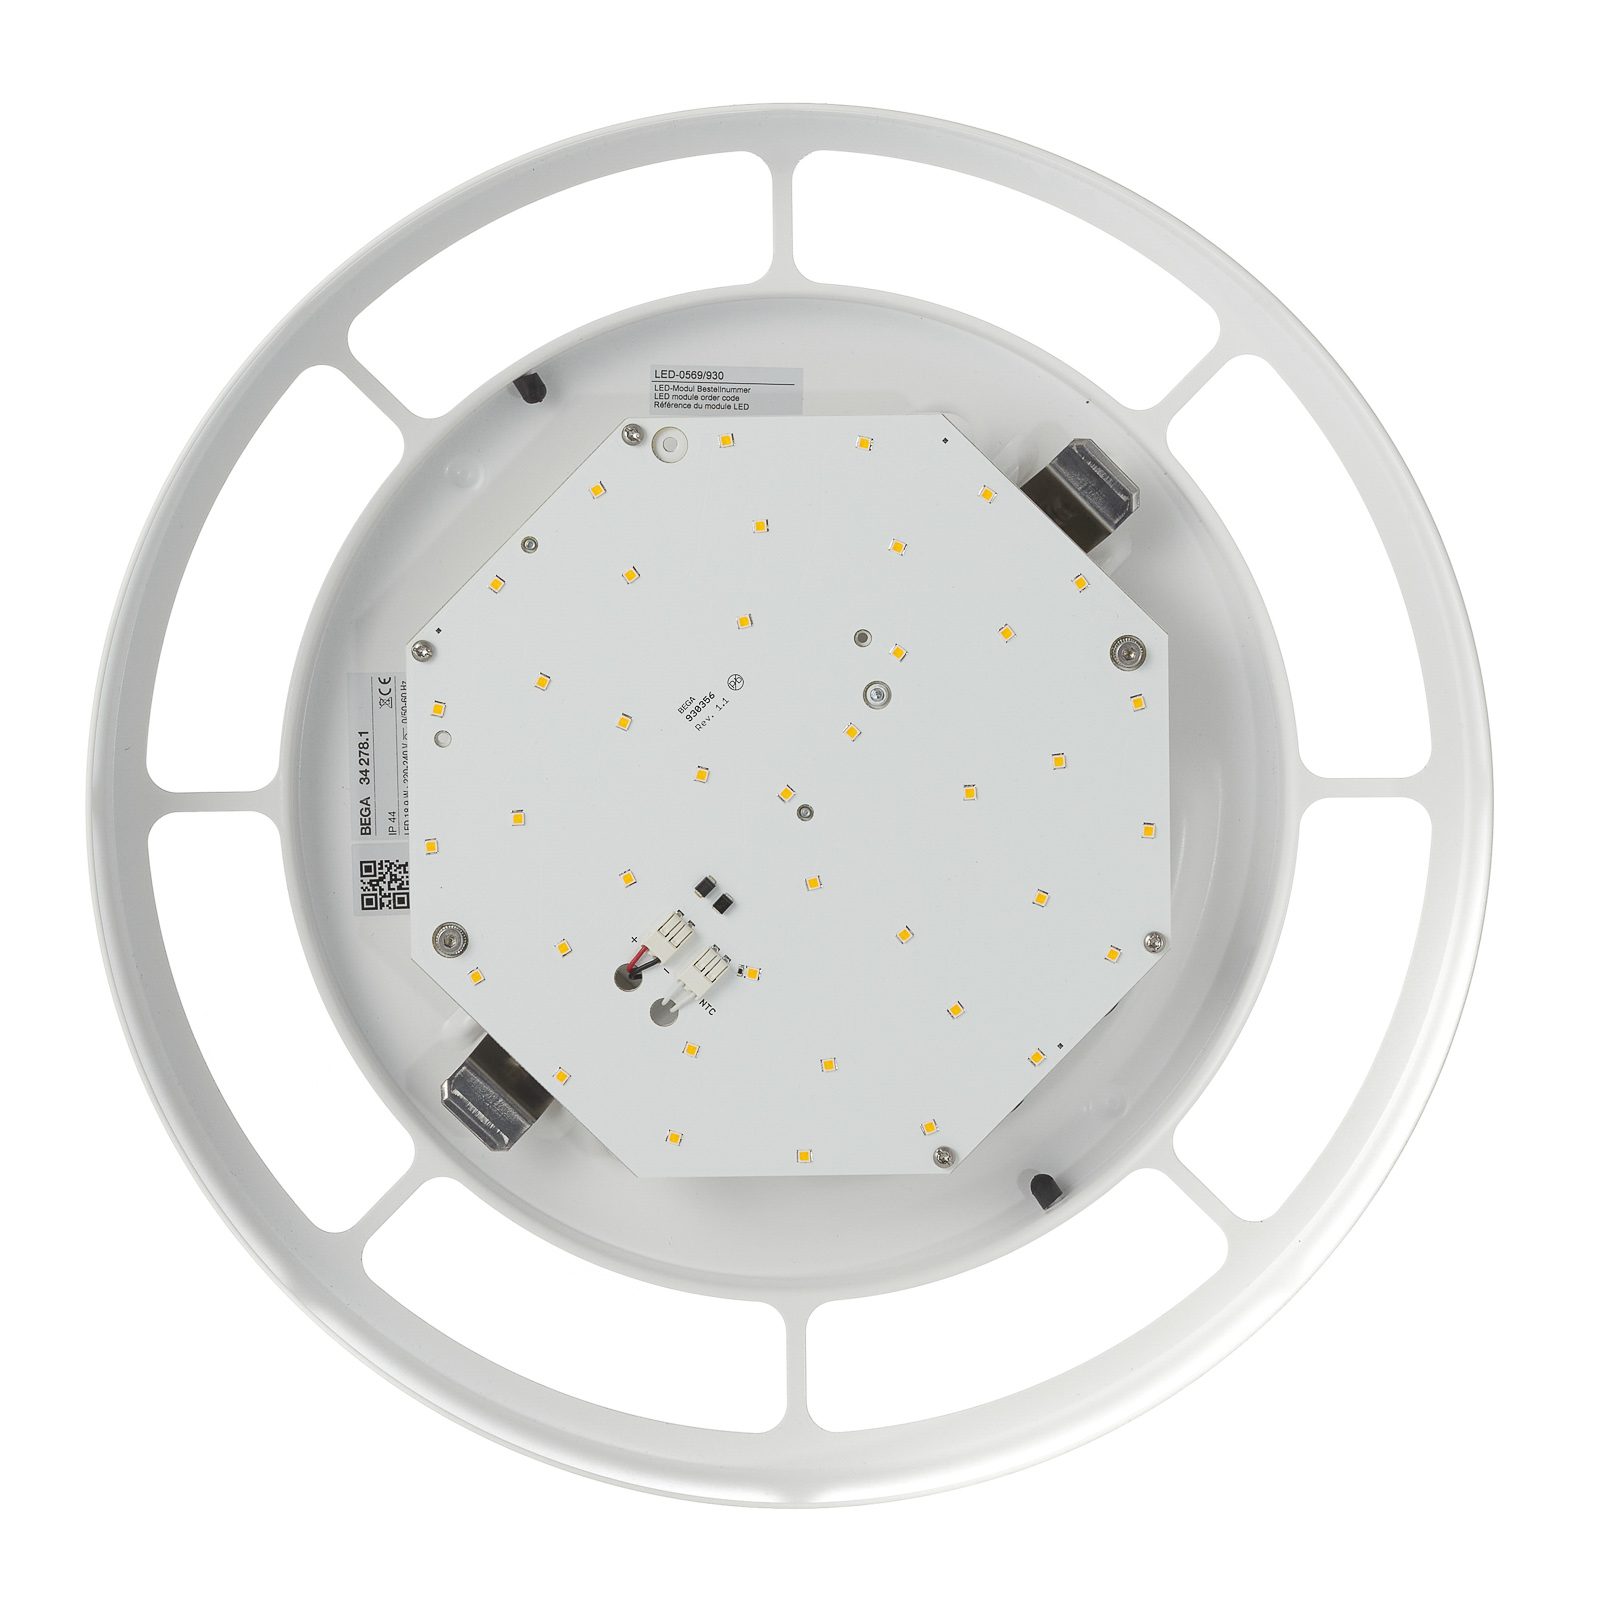 BEGA 34278 LED-kattovalaisin, valkoinen, Ø 36 cm